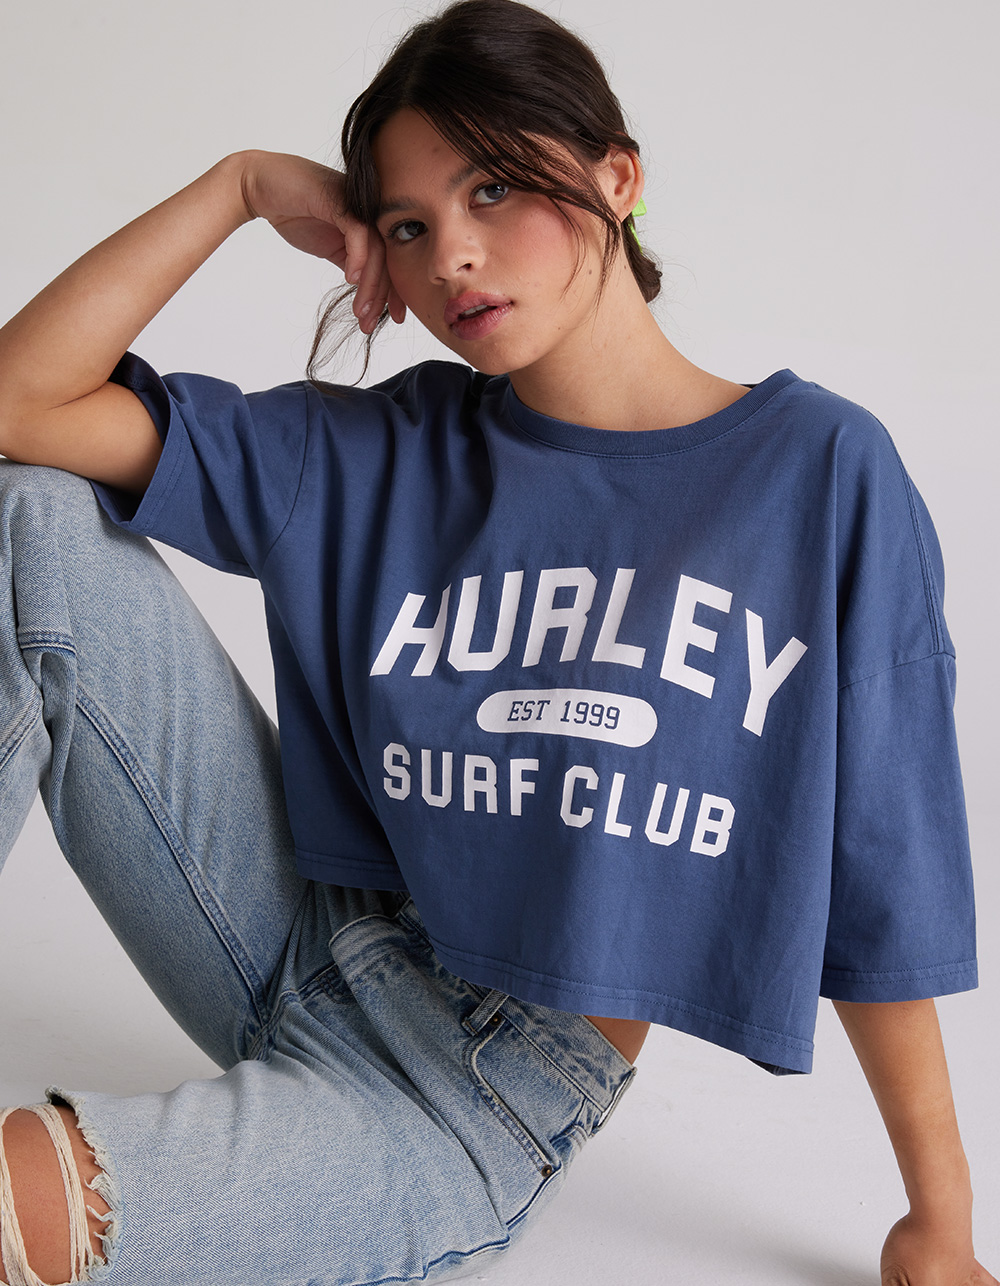 HURLEY Surf Club Womens Boyfriend Crop Tee